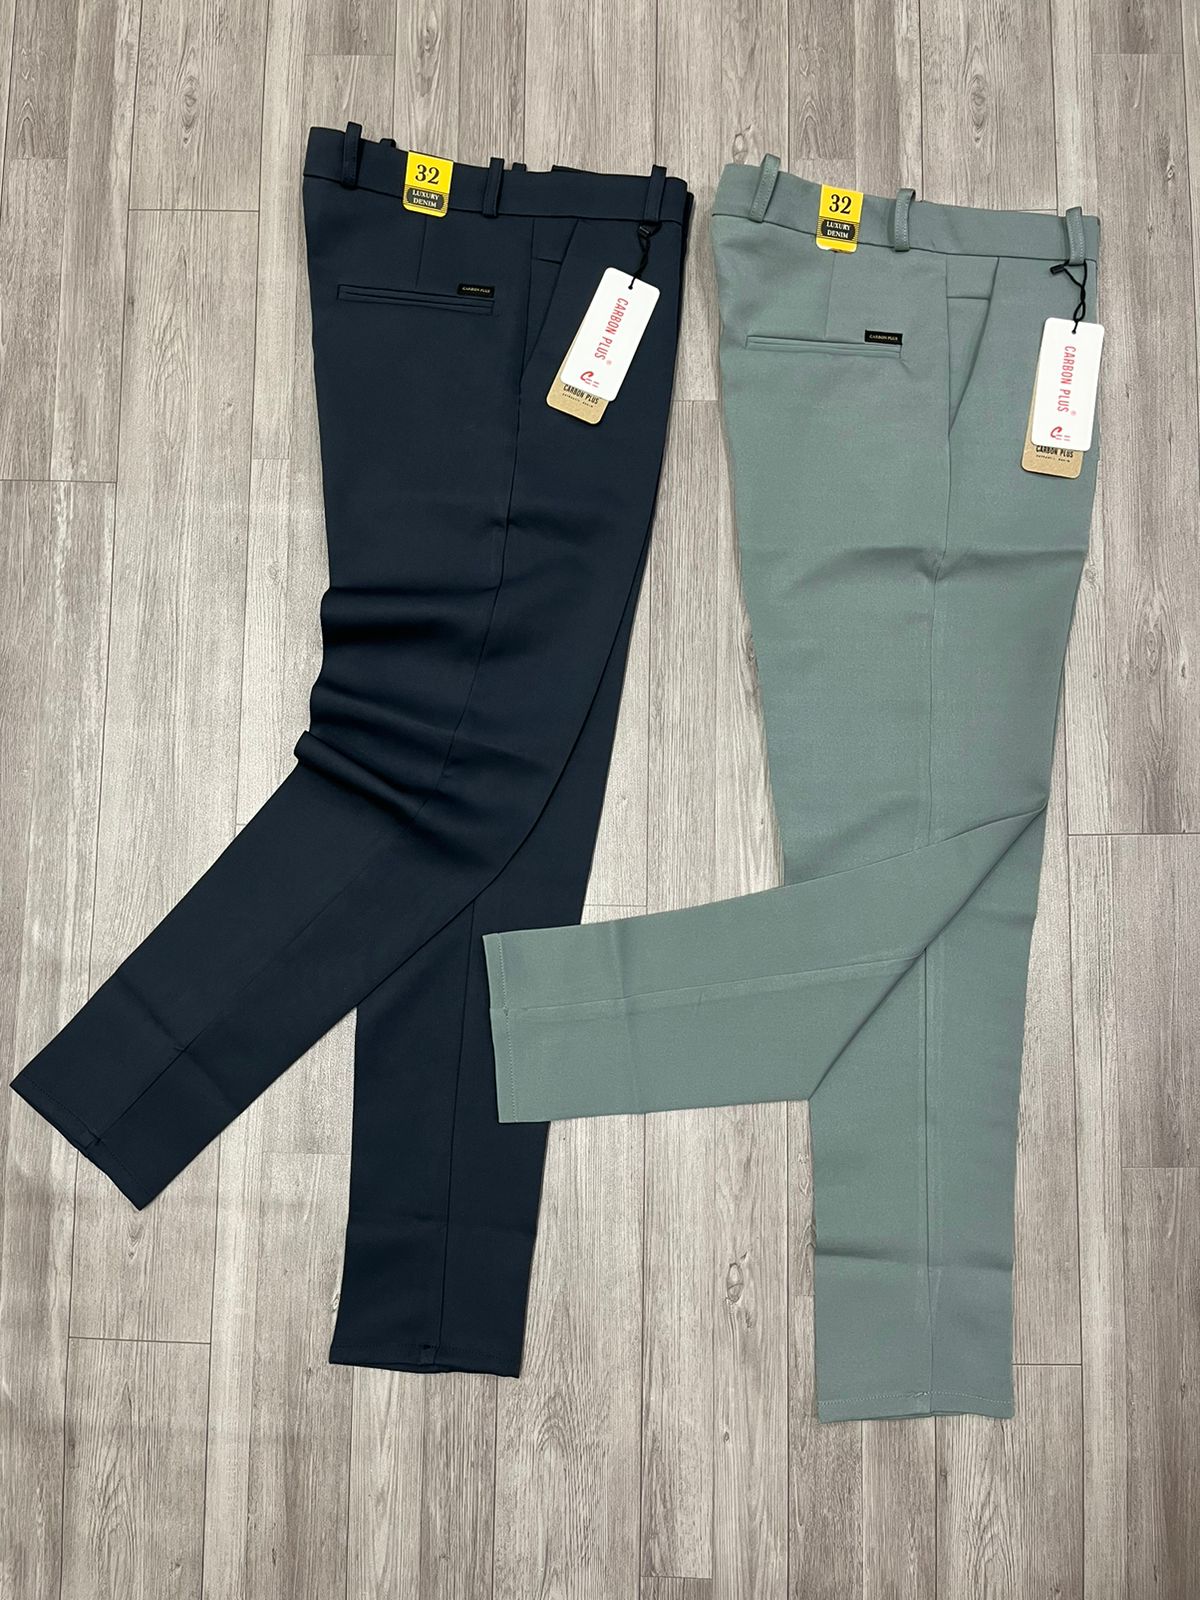 Lycra trousers for Men/Boys